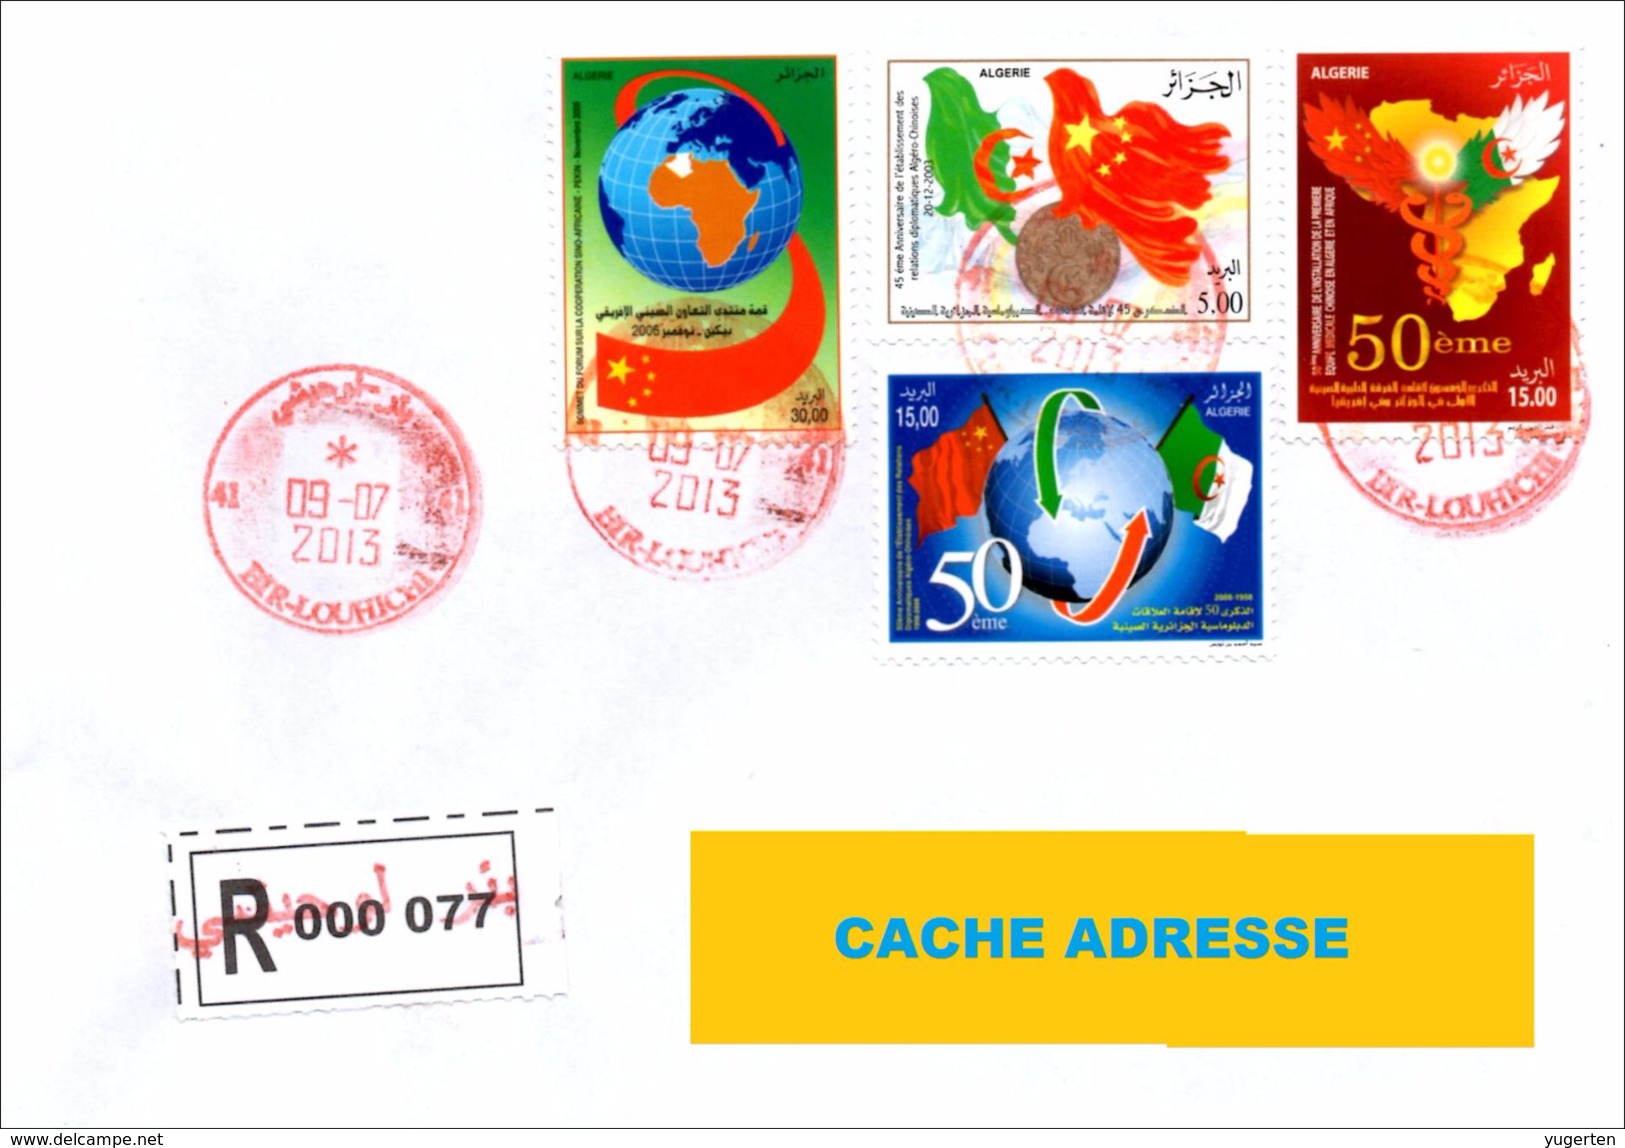 ALGERIA 2013 - LR - Registered Cover - Letter - Lettre - Pli Circulé - Algeria - China Relationship - Covers